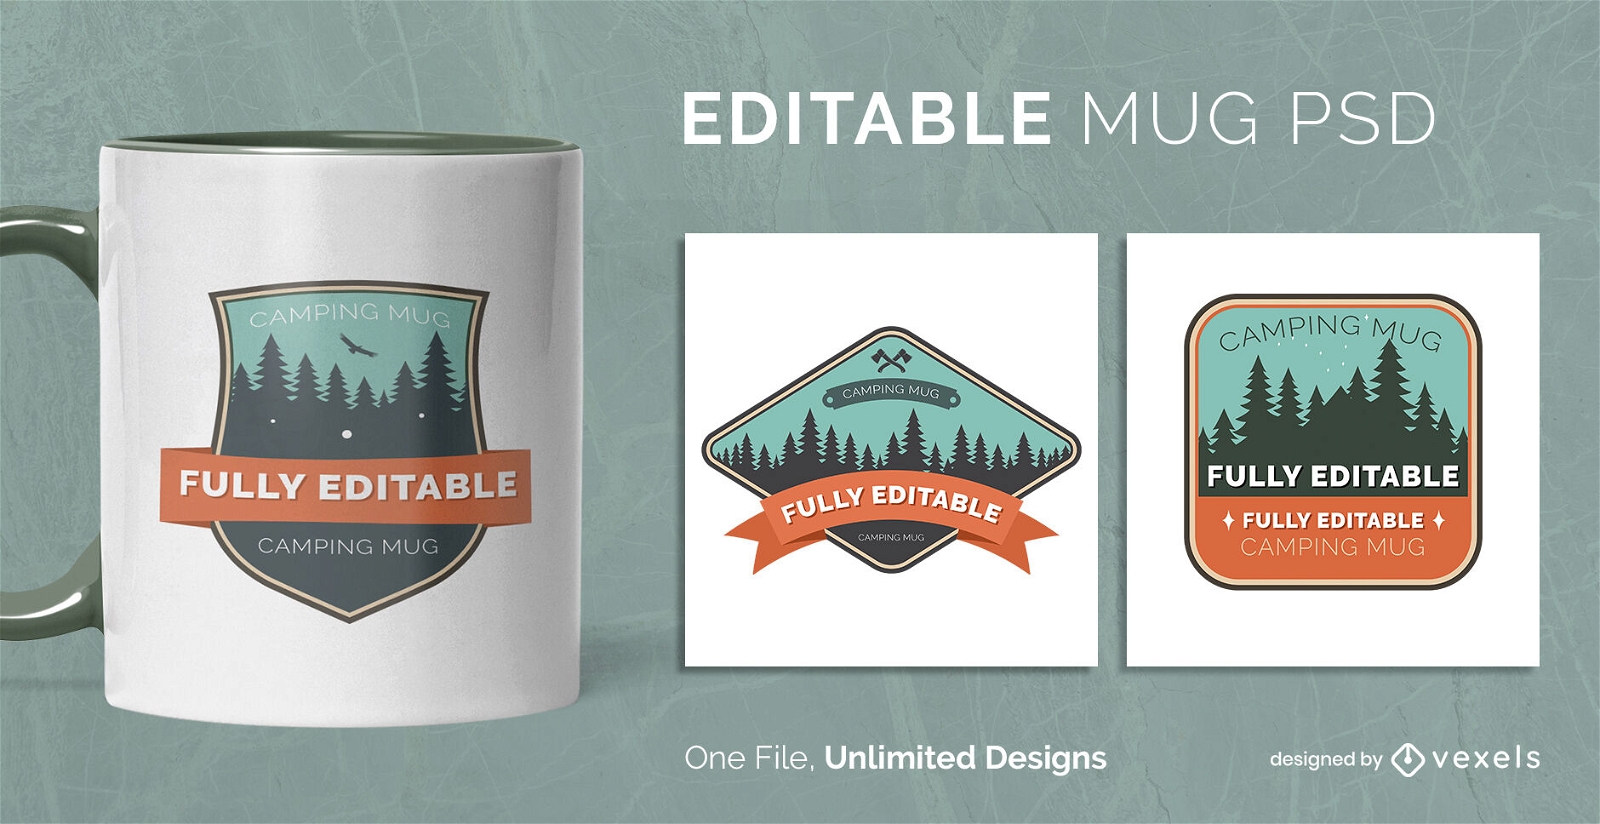 Camping badges scalable mug template